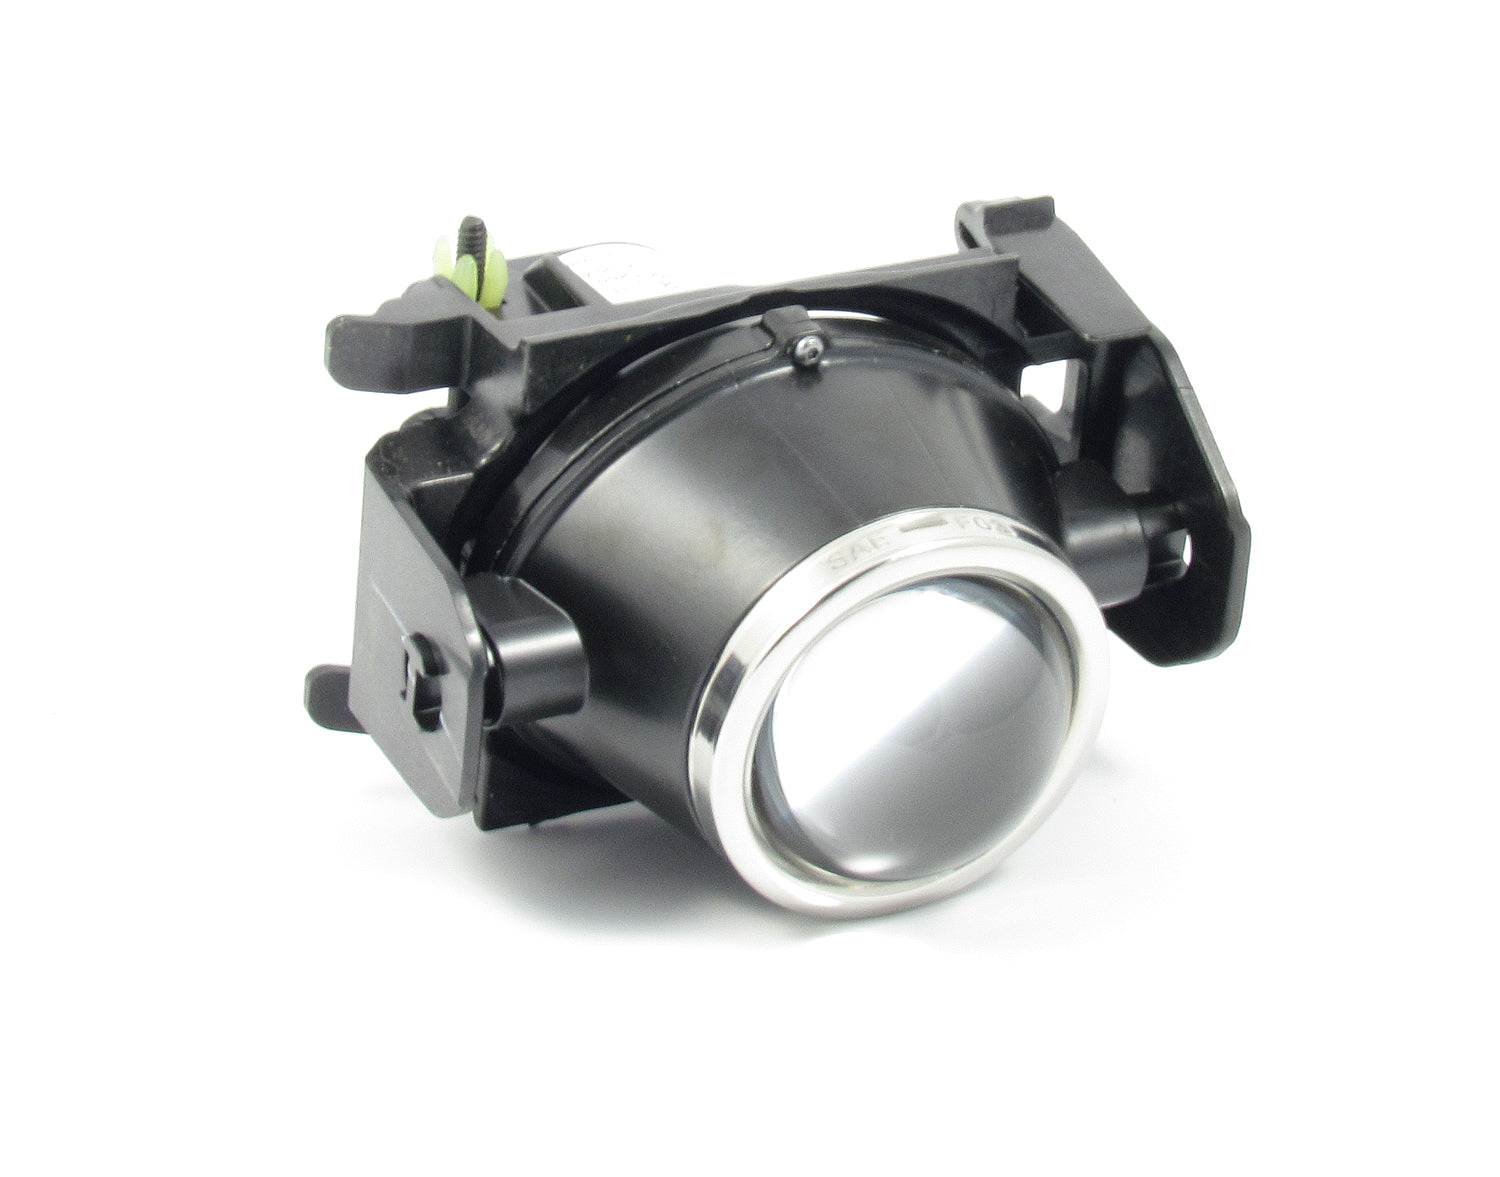 Projector Fog Light Assembly & H11 Halogen Bulb (2010-2014)